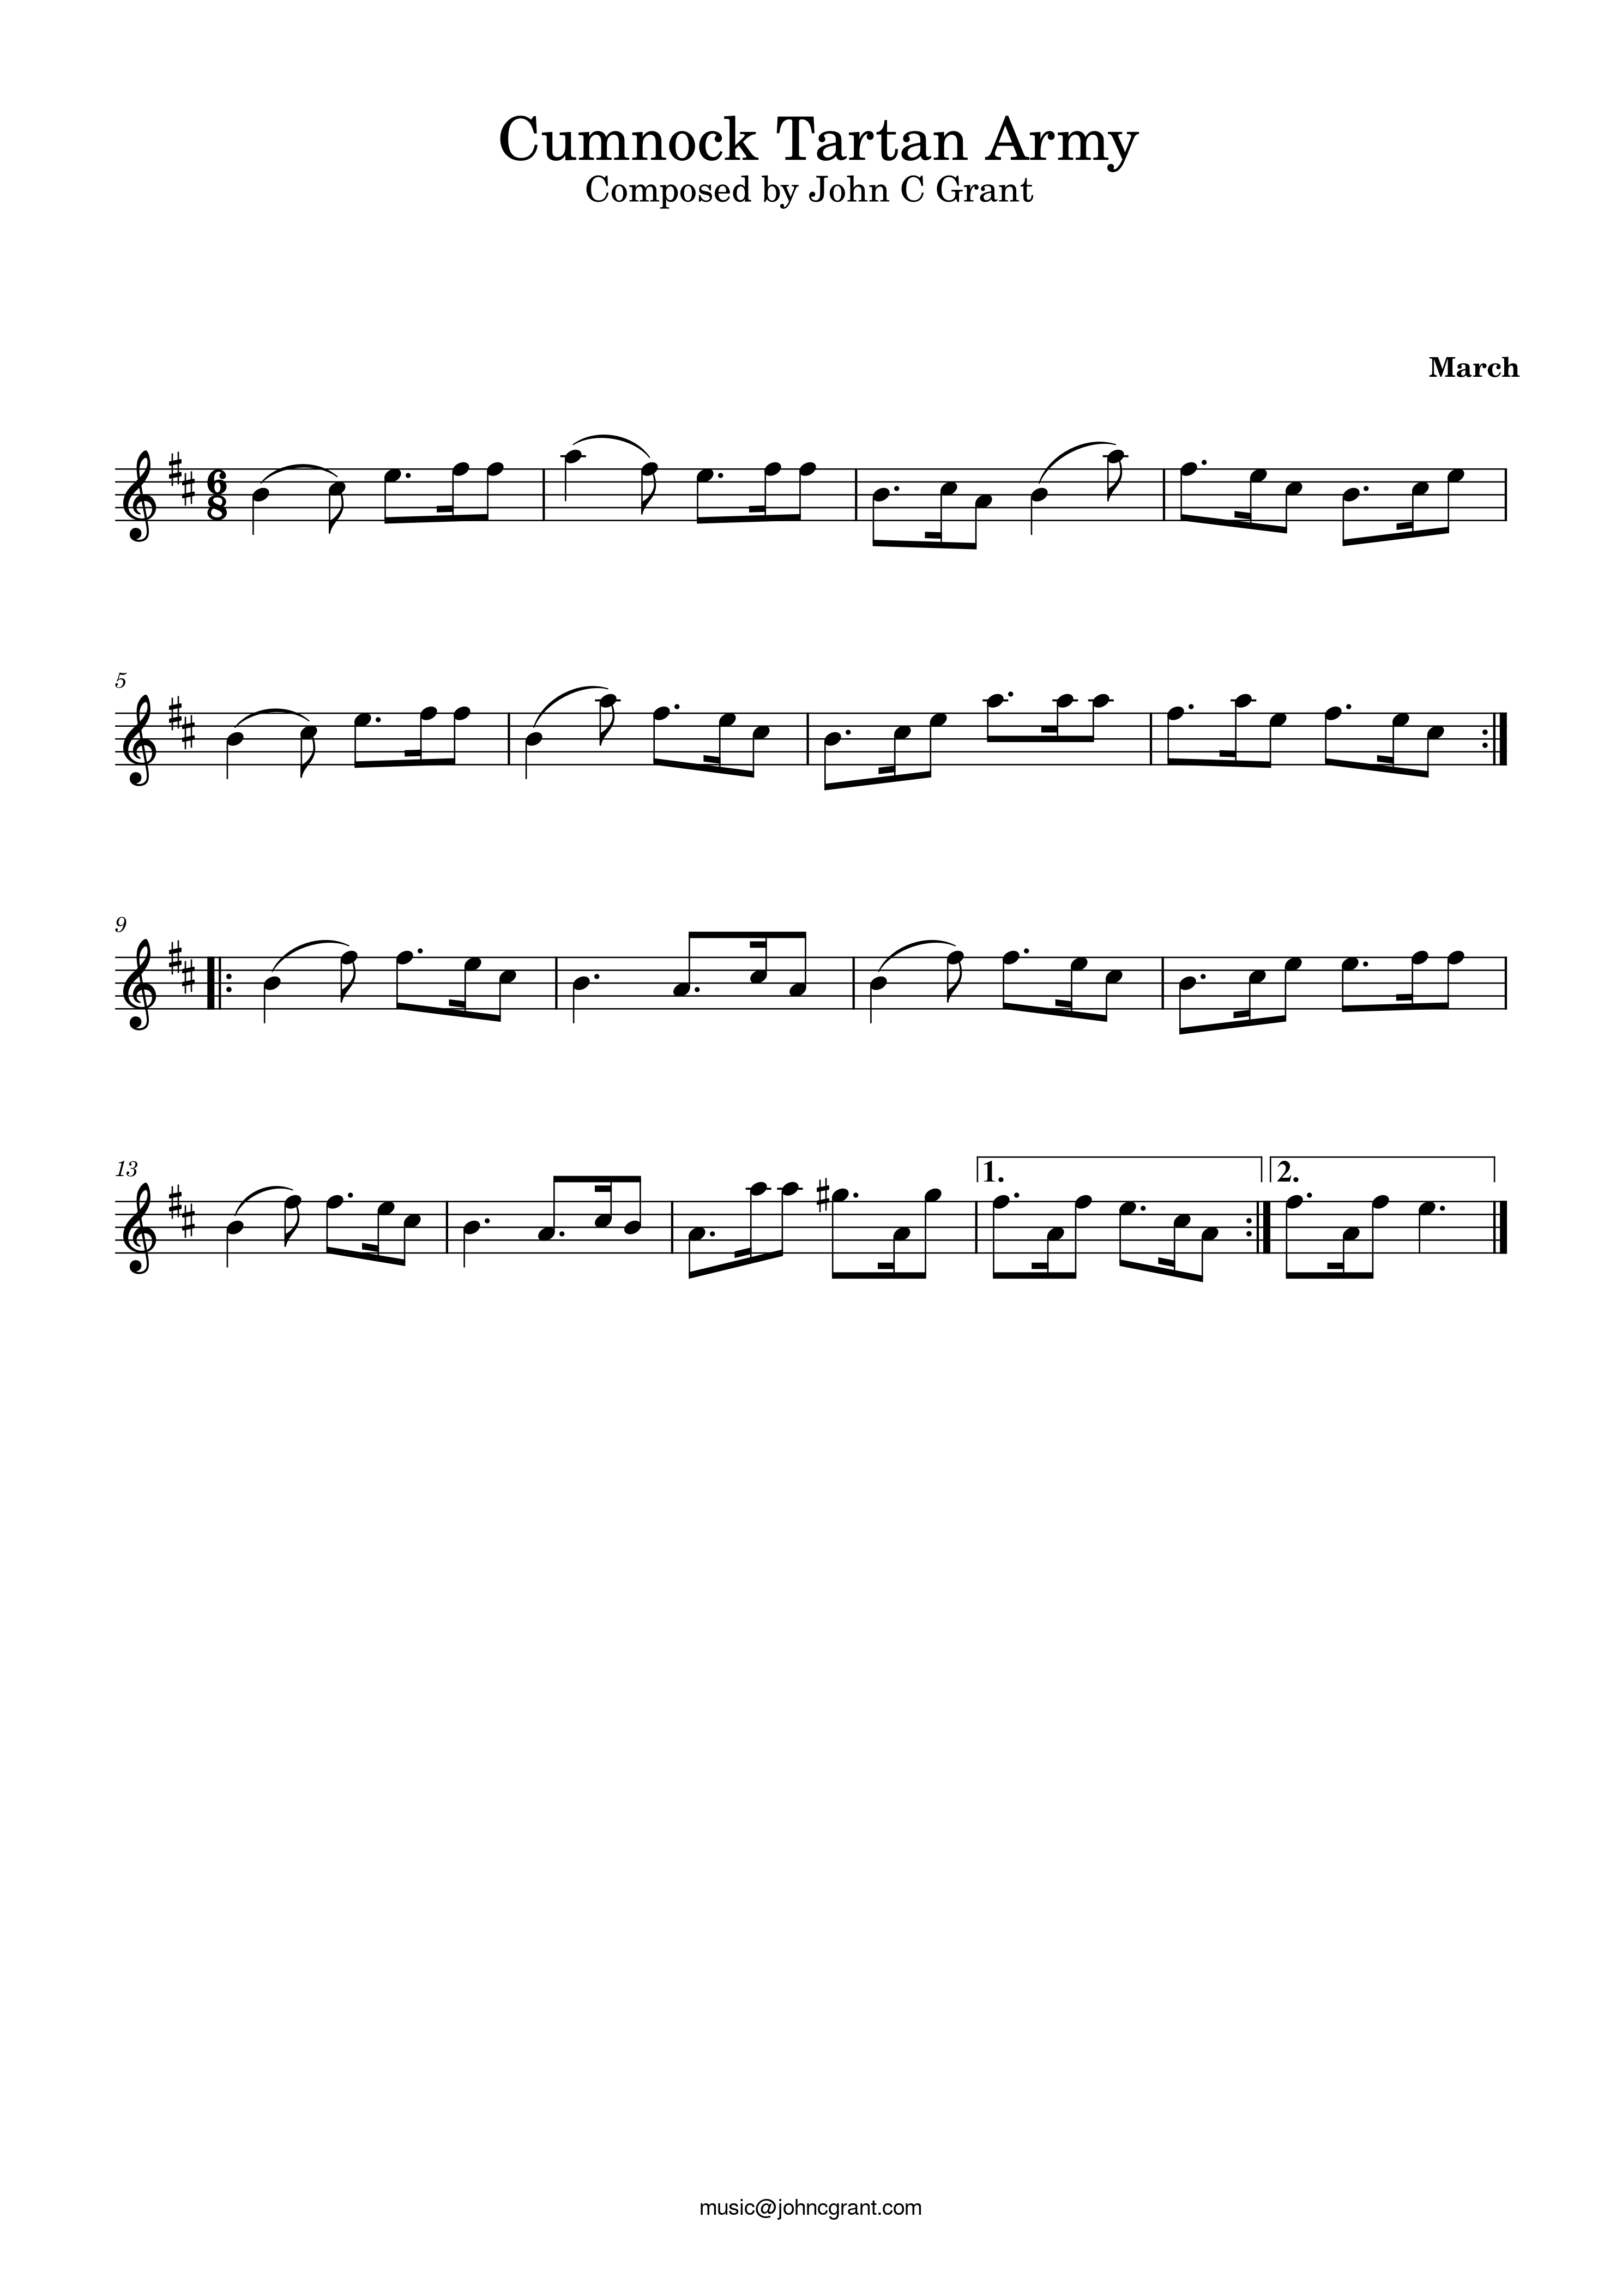 Cumnock Tartan Army - Composed by John C Grant (https://johncgrant.com). Traditional composer from Kilmarnock, Ayrshire, Scotland.